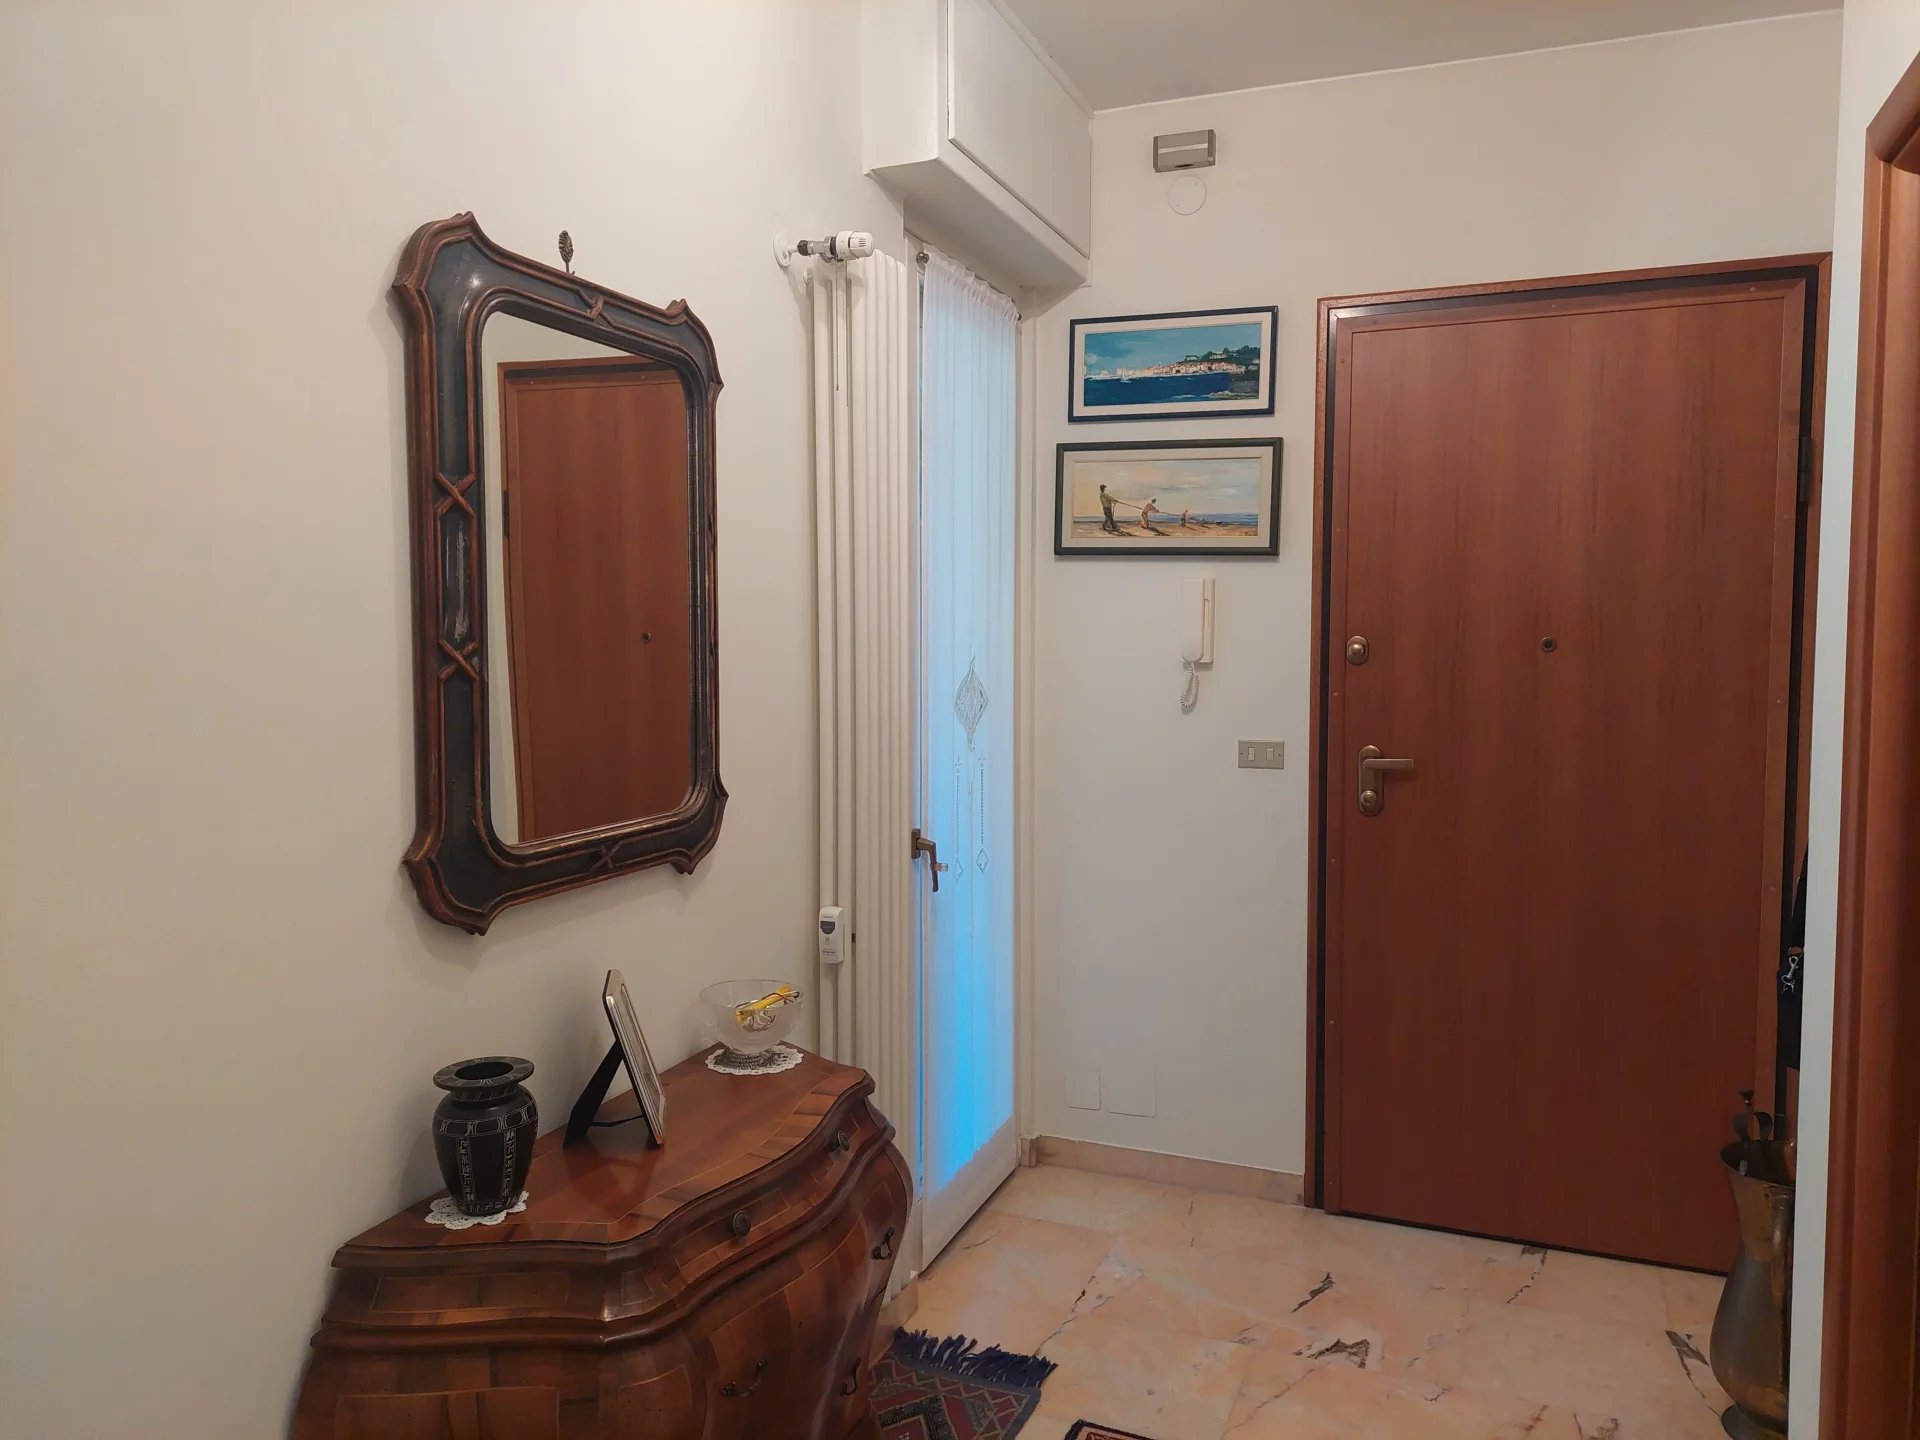 Sale Apartment - Bordighera - Italy